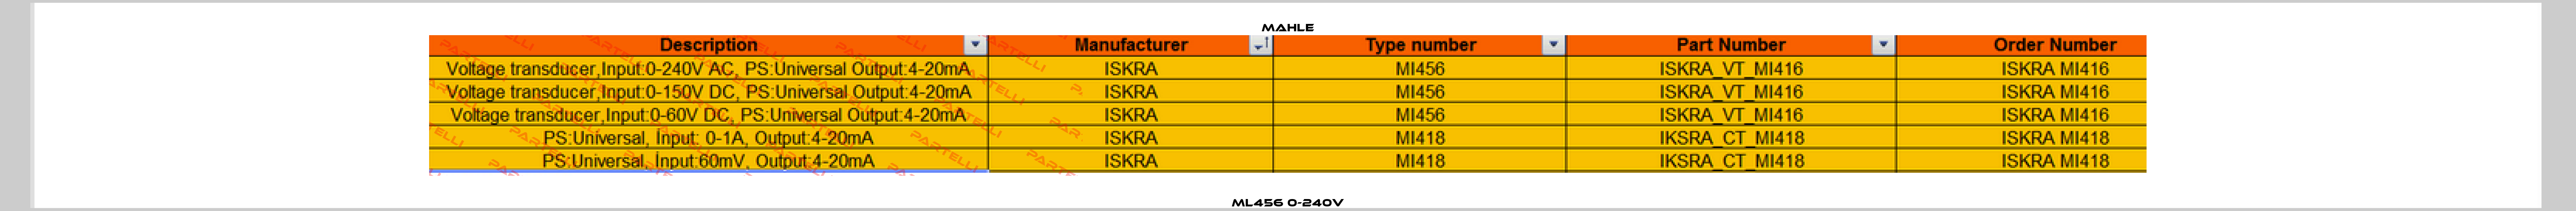 Ml456 0-240V Mahle